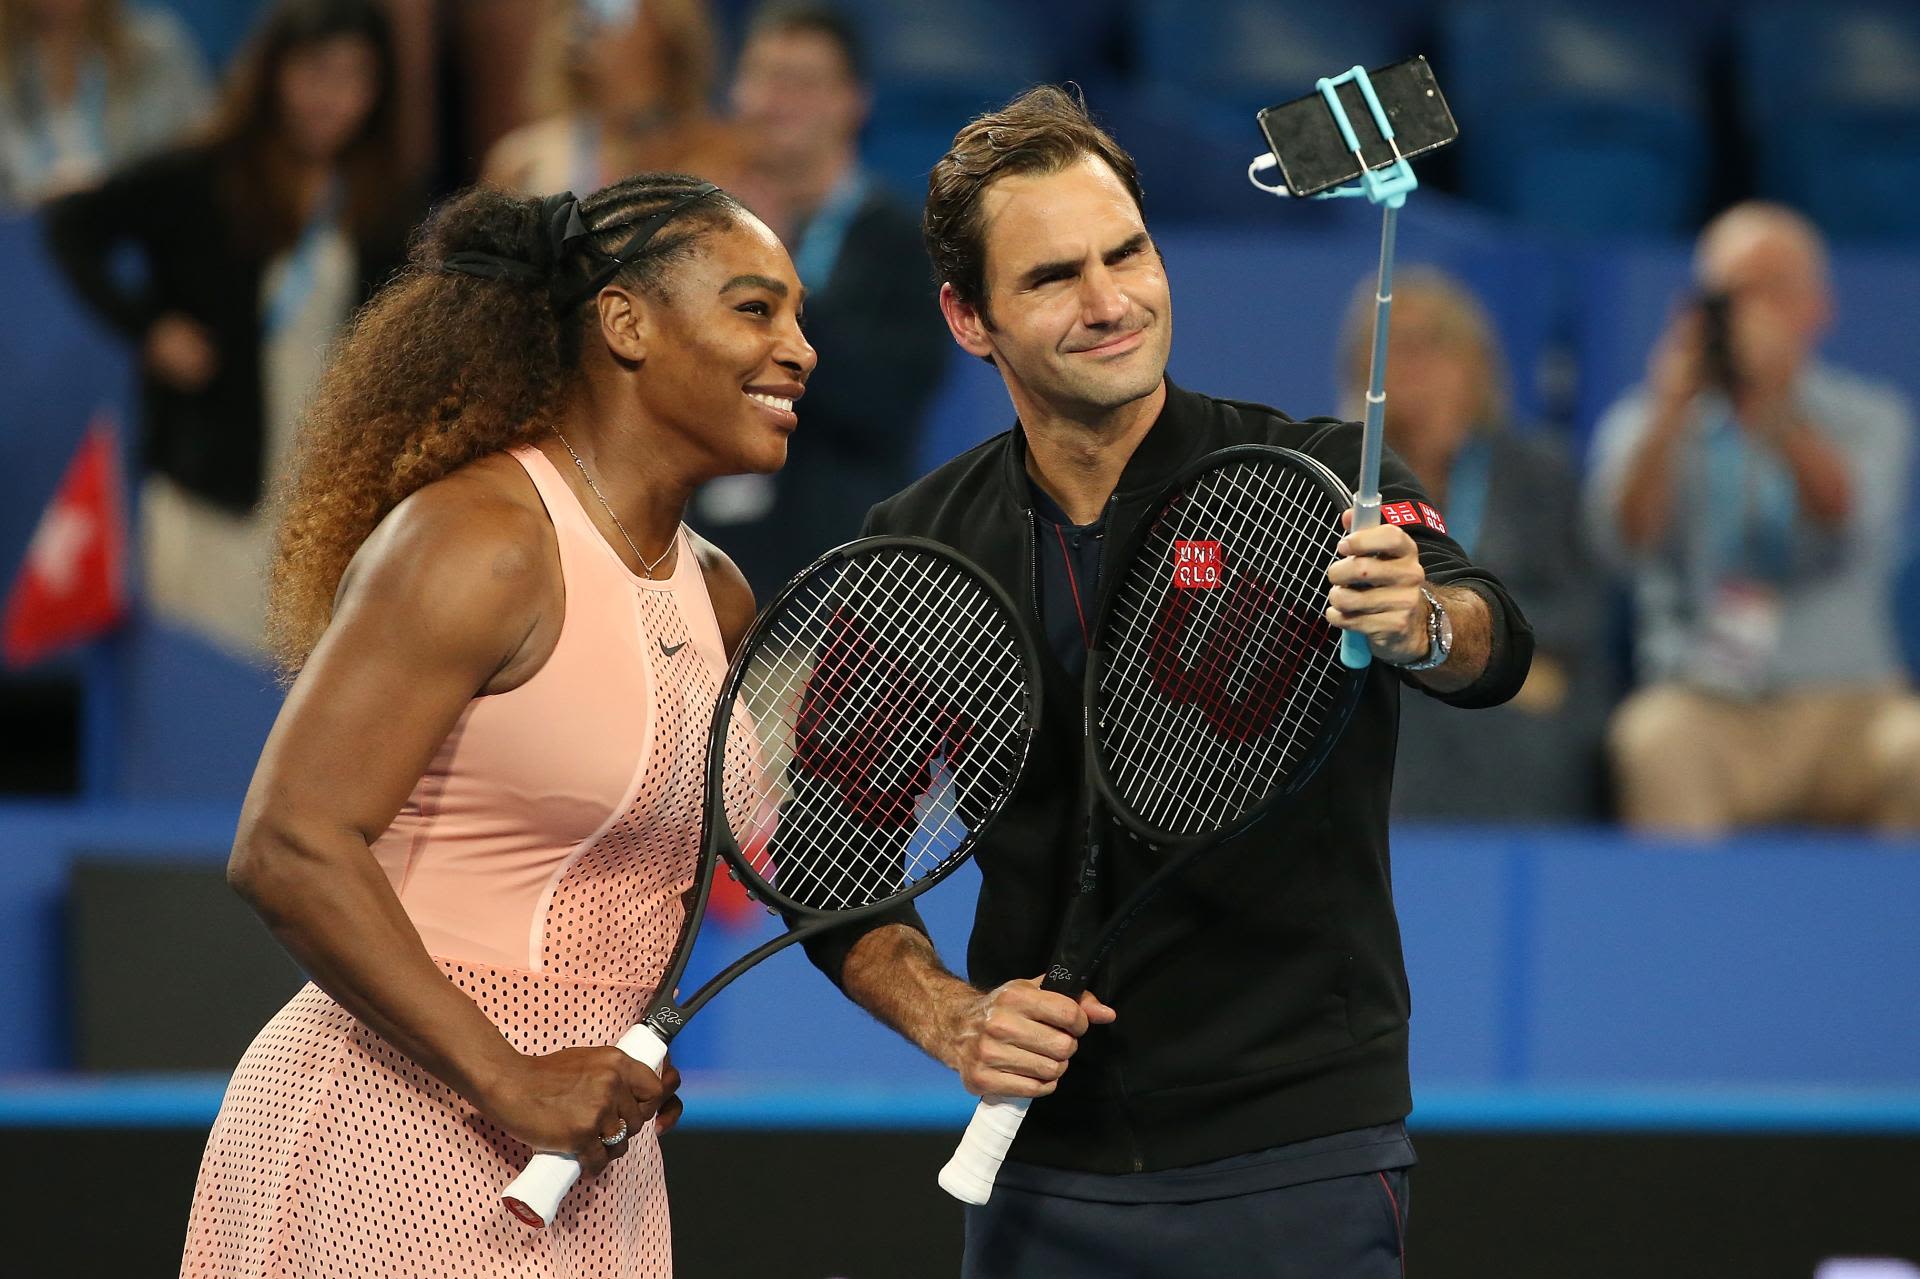 ESPN best athletes of century: Federer and Serena Williams in Top-10, Venus snubbed